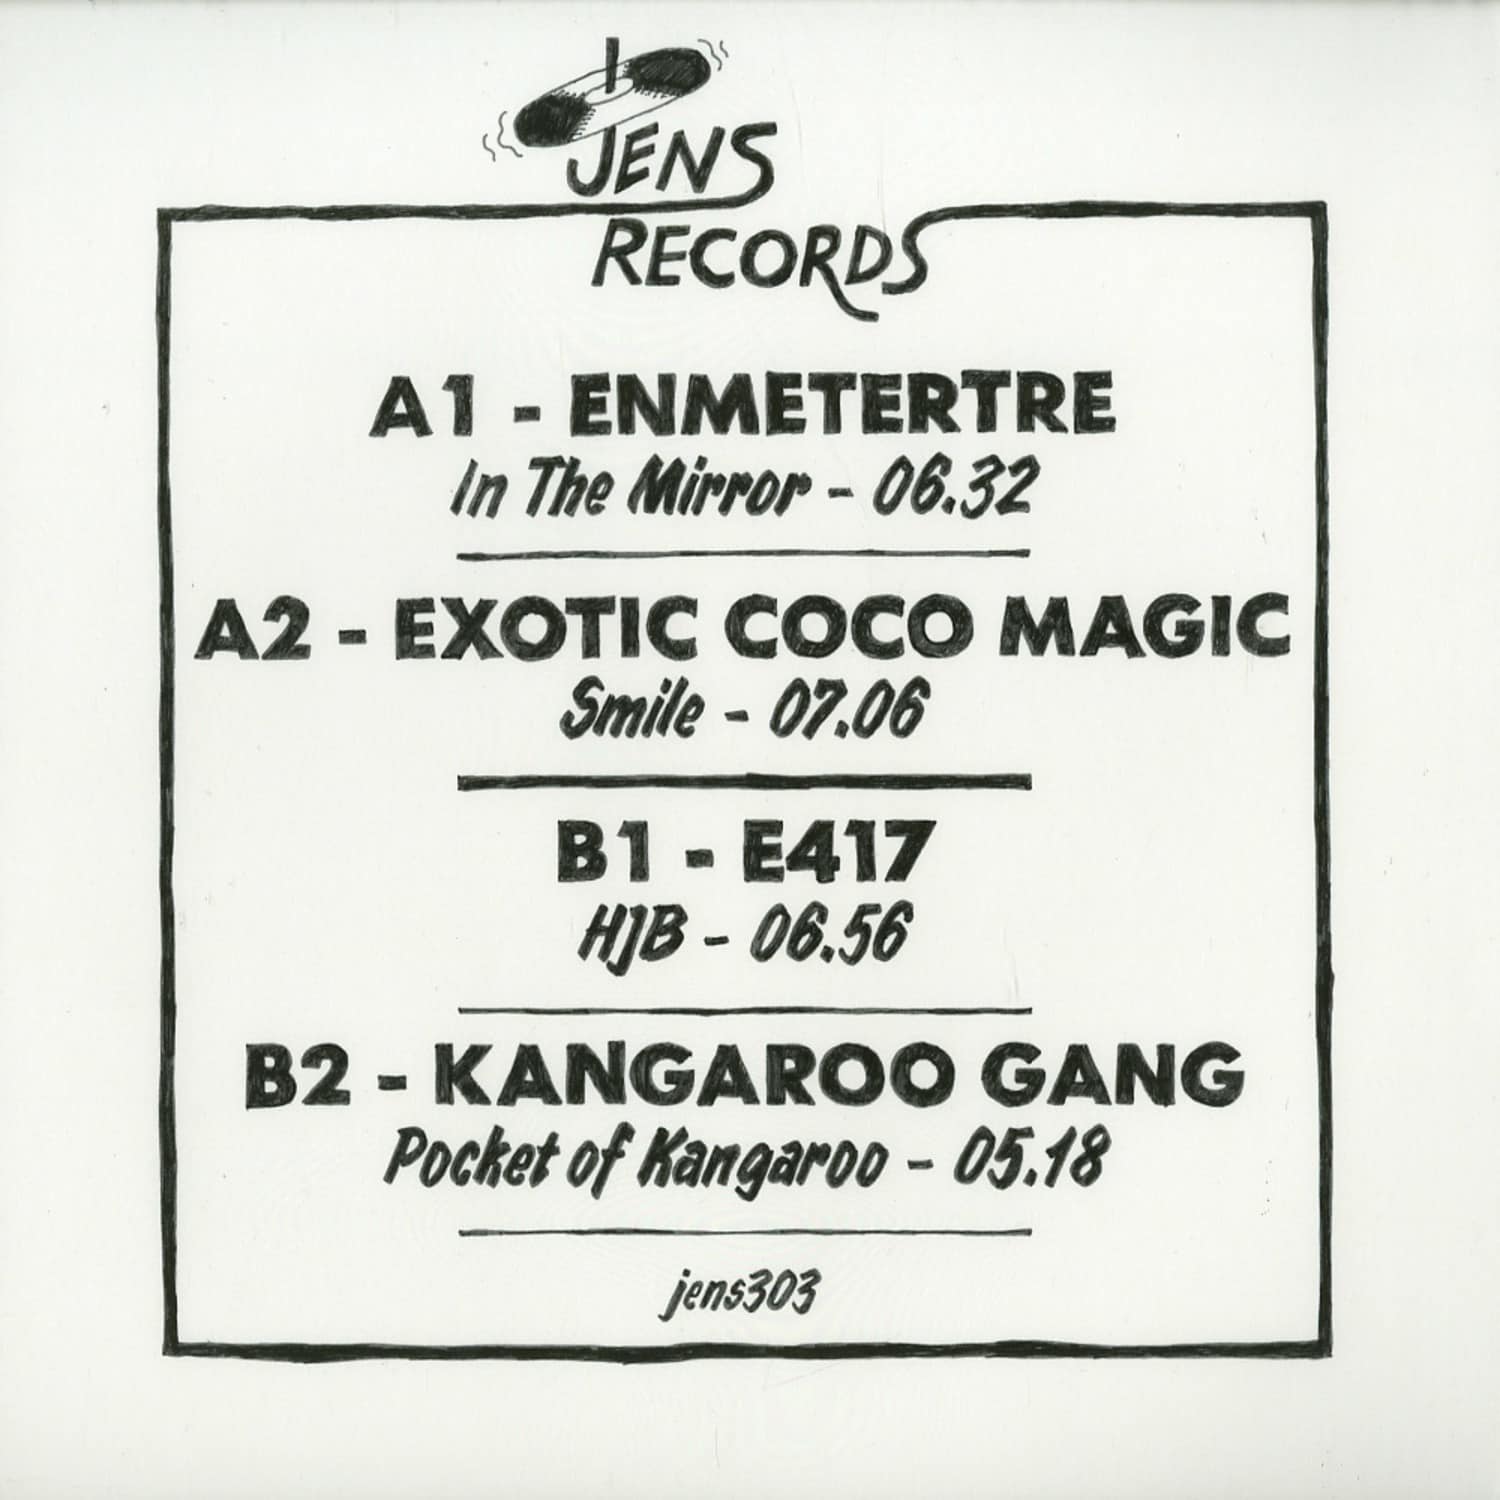 Enmetertre, Exotic Coco Magic, E417, Kangaroo Gang - JENS 303 